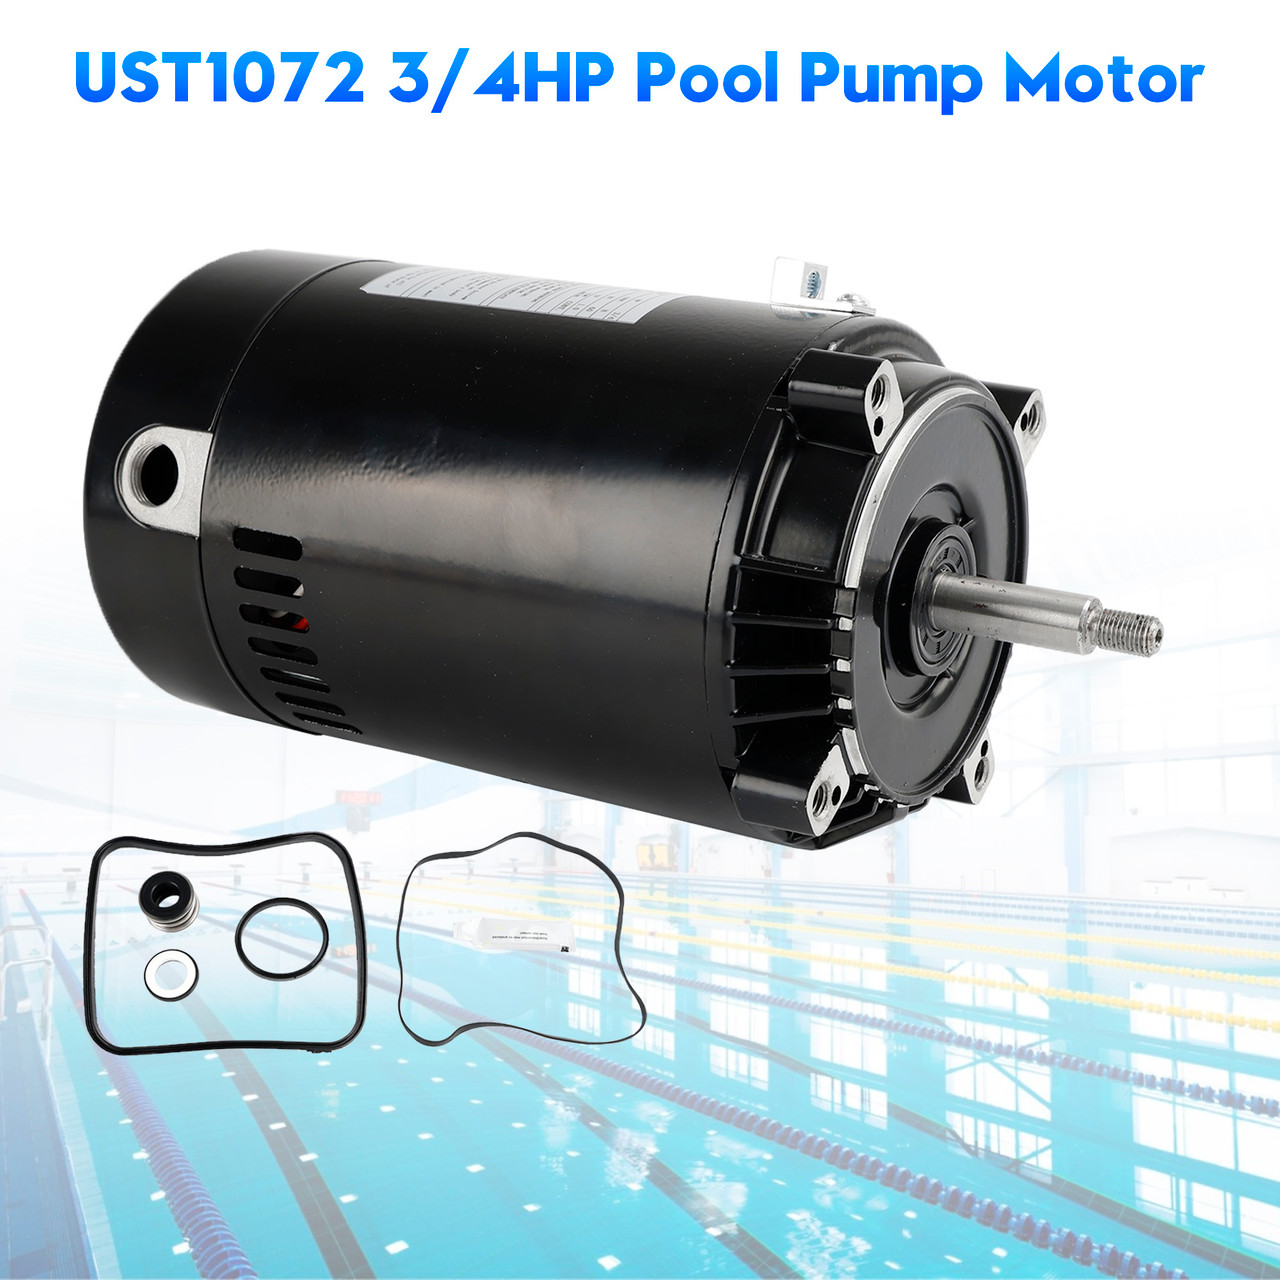 UST1072 Pool Pump Motor 3/4HP 115/230V Replacemen Motor For Hay-ward Super Pump